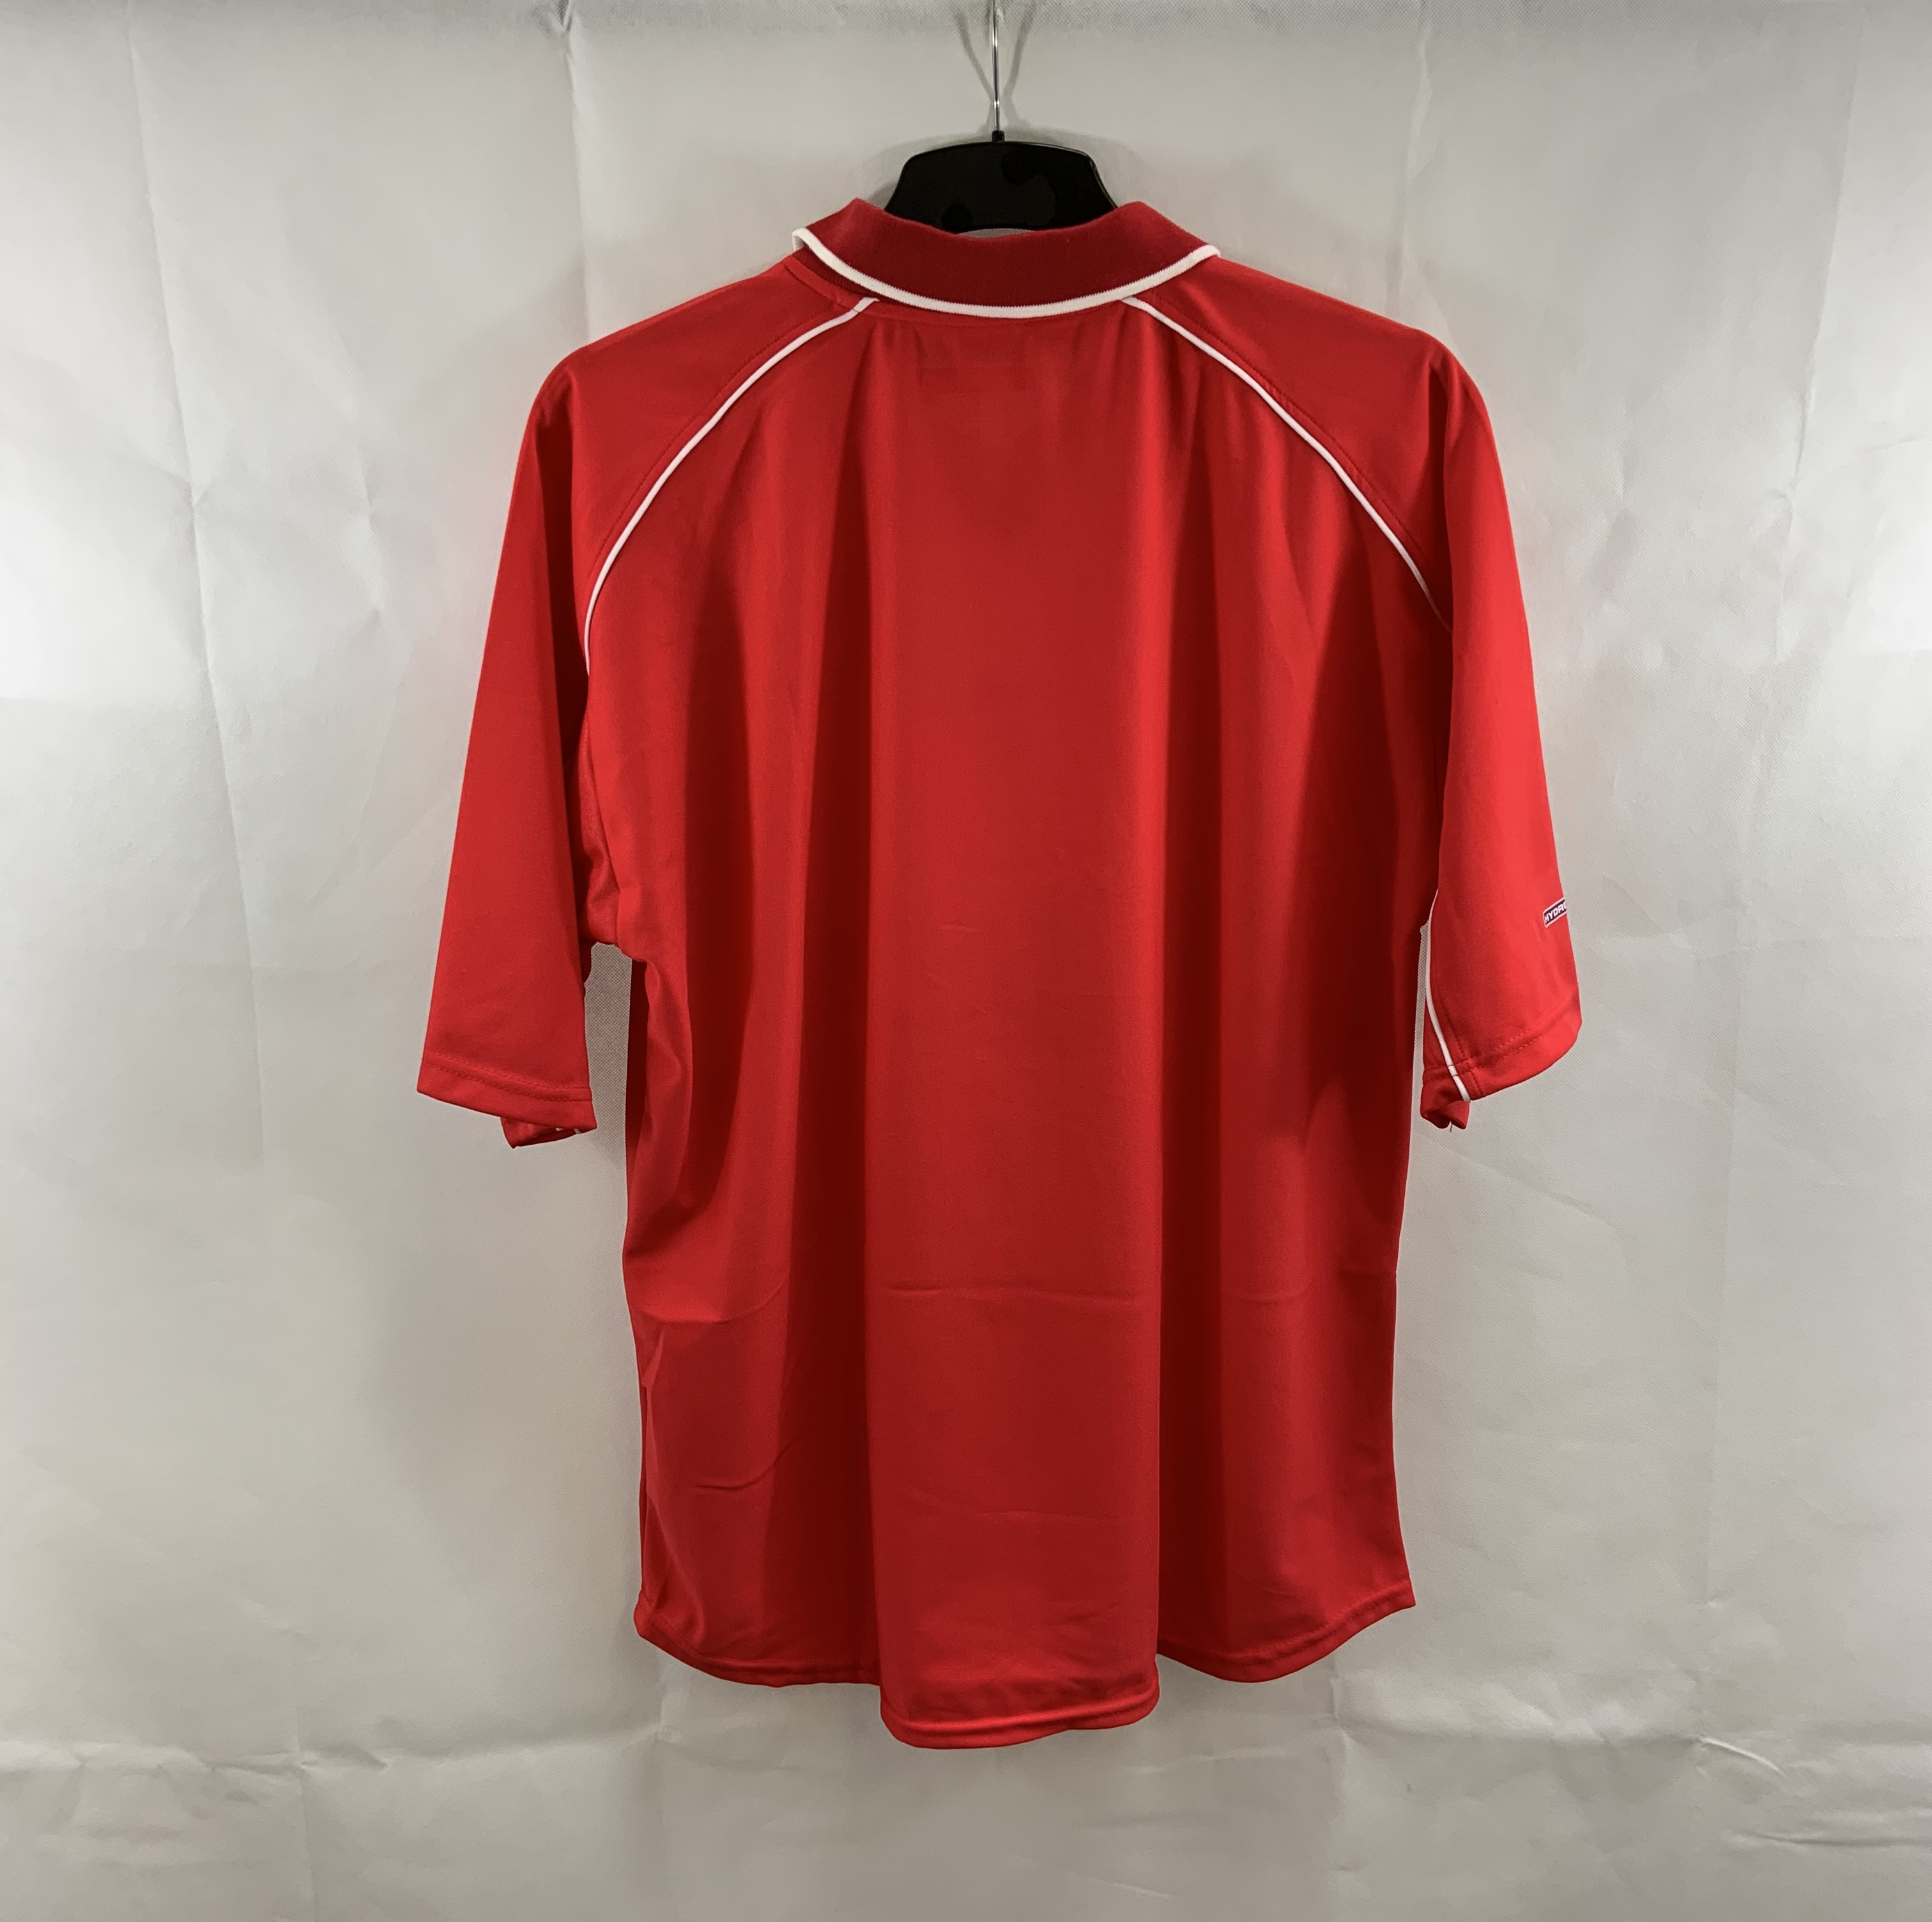 Liverpool Treble 2001 Home Football Shirt 2000/02 Adults XL Reebok C811 ...